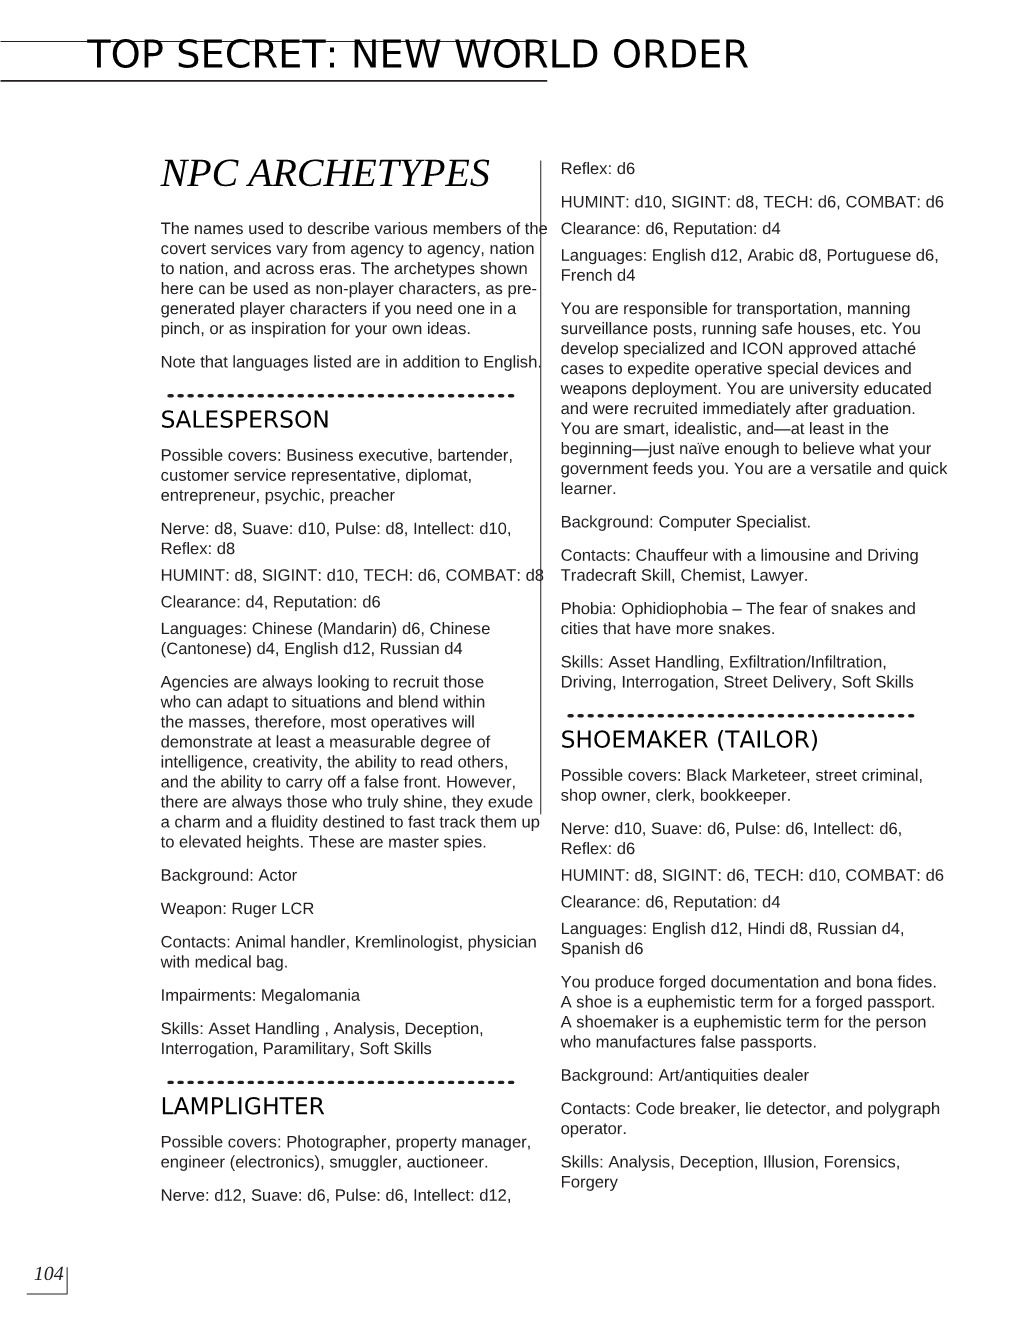 Npc Archetypes